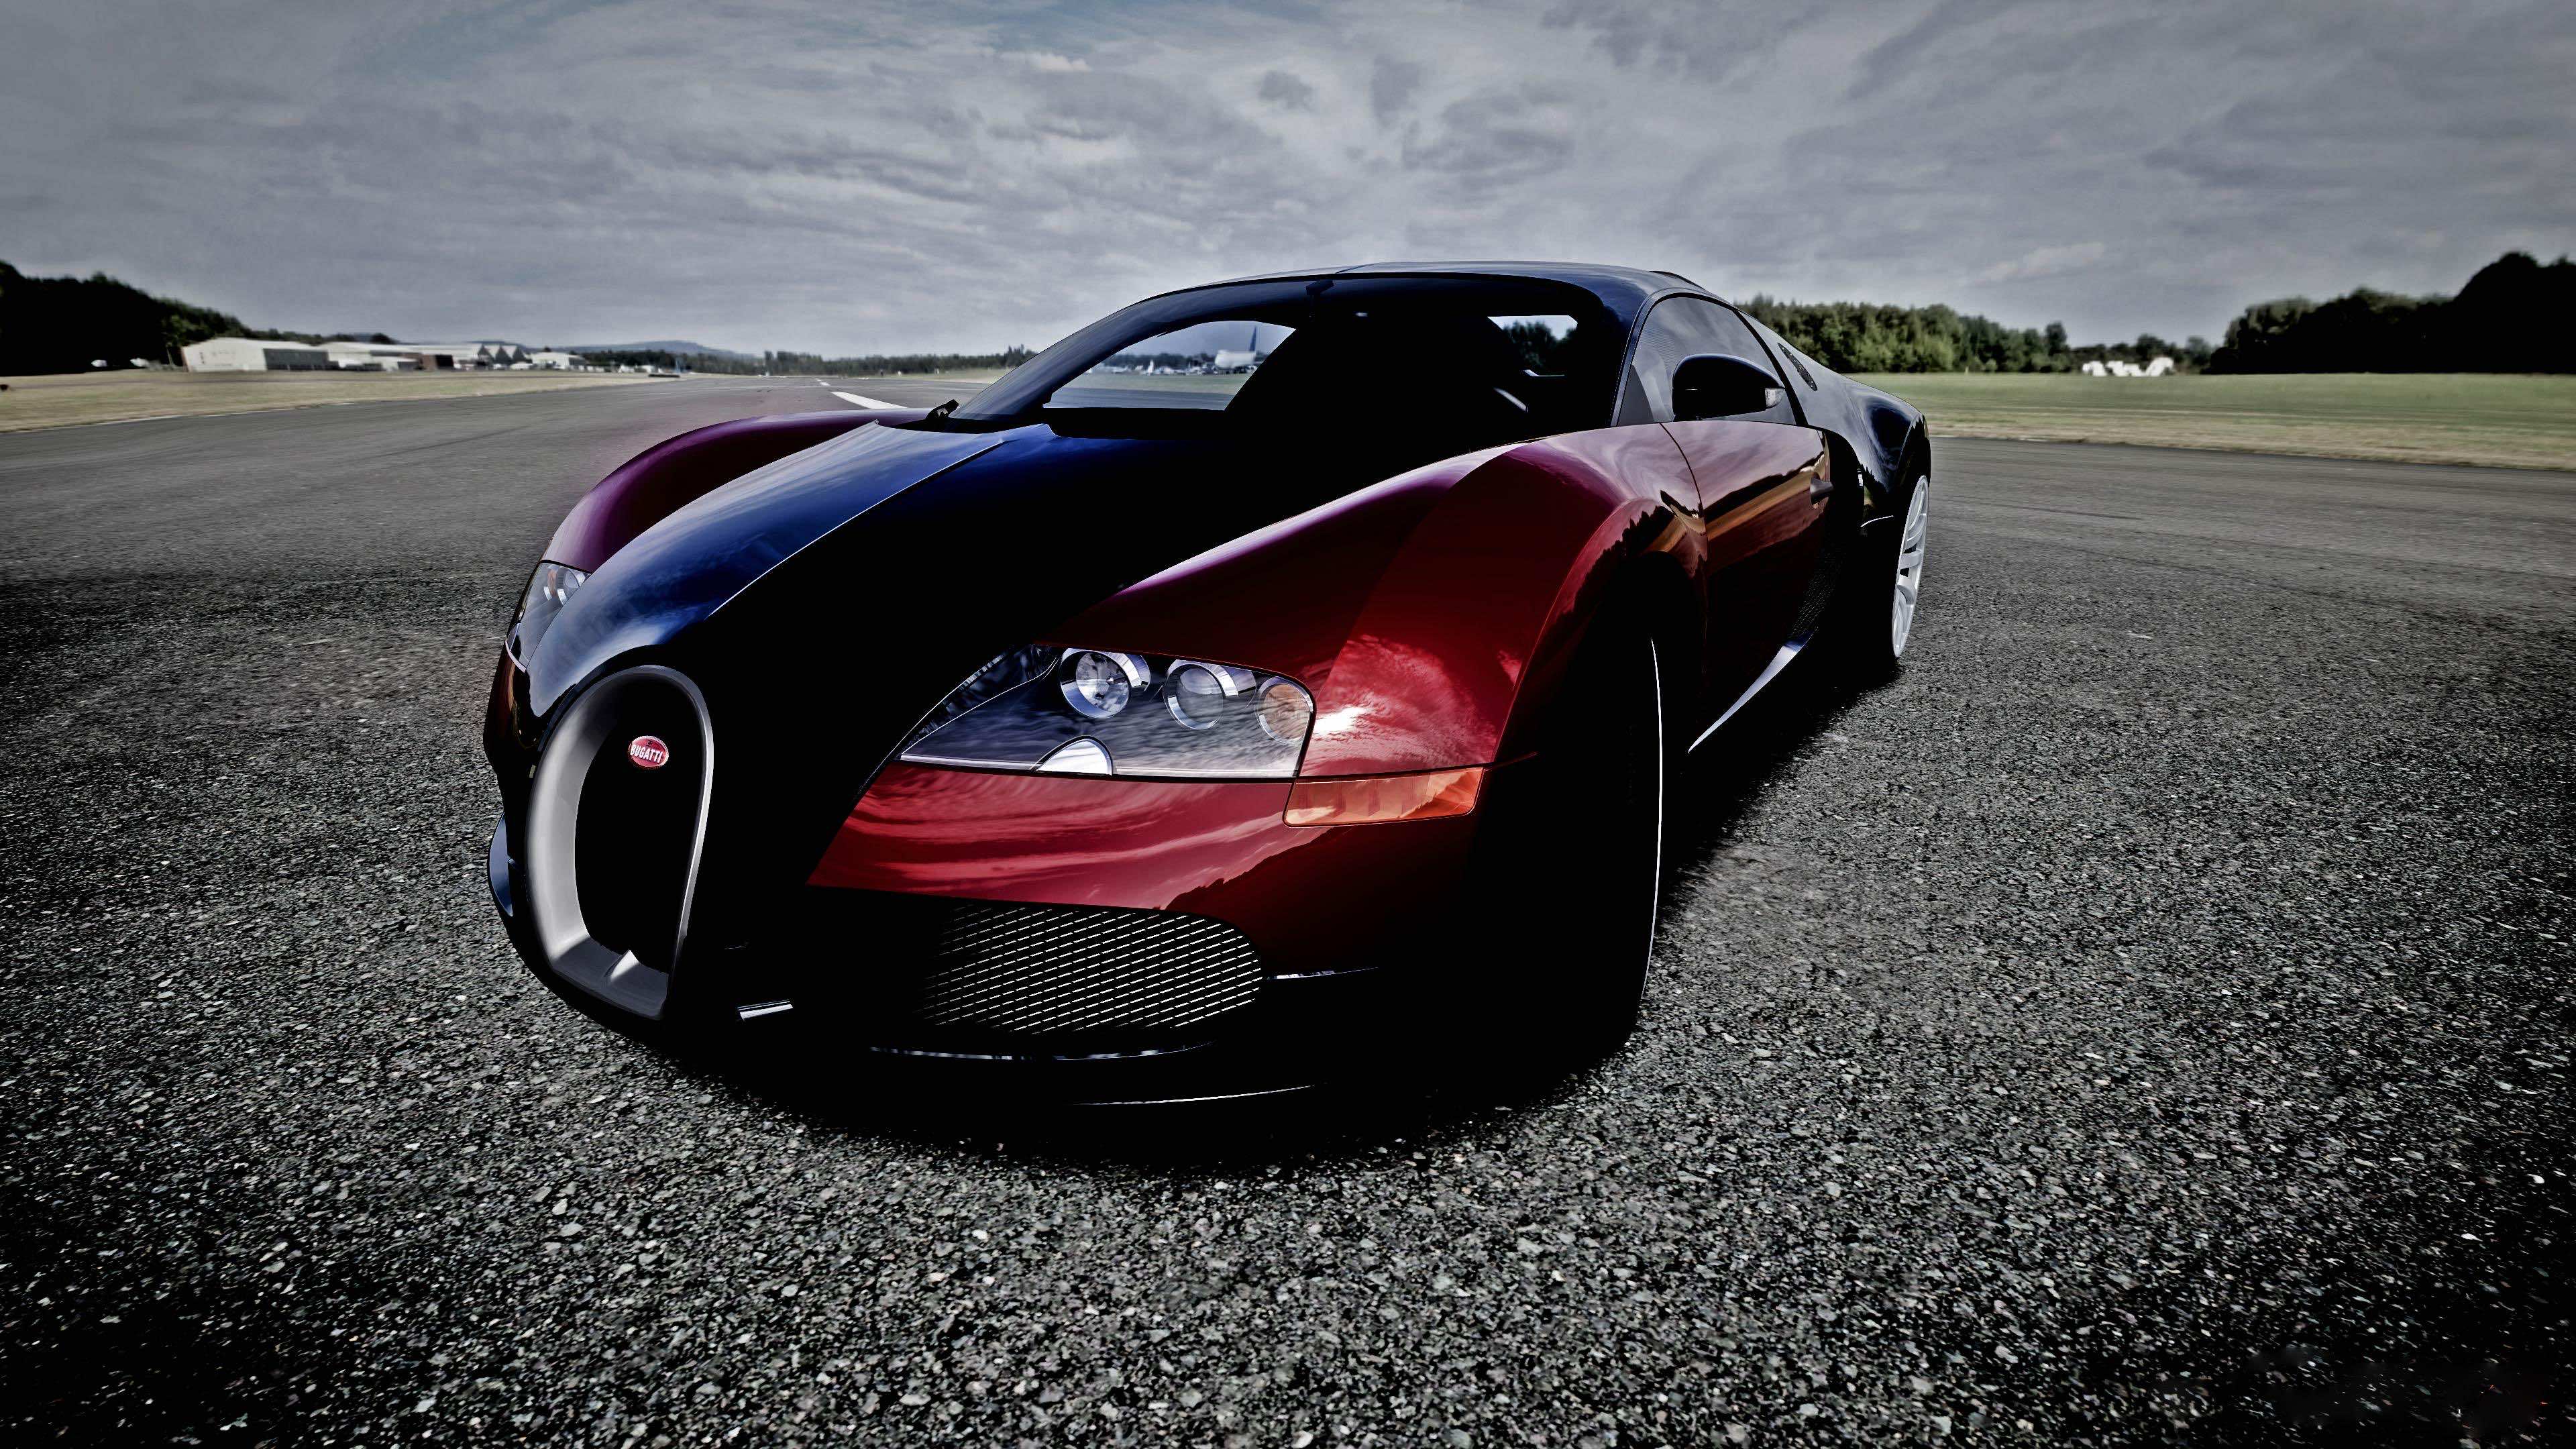 Bugatti Car Images Full Hd